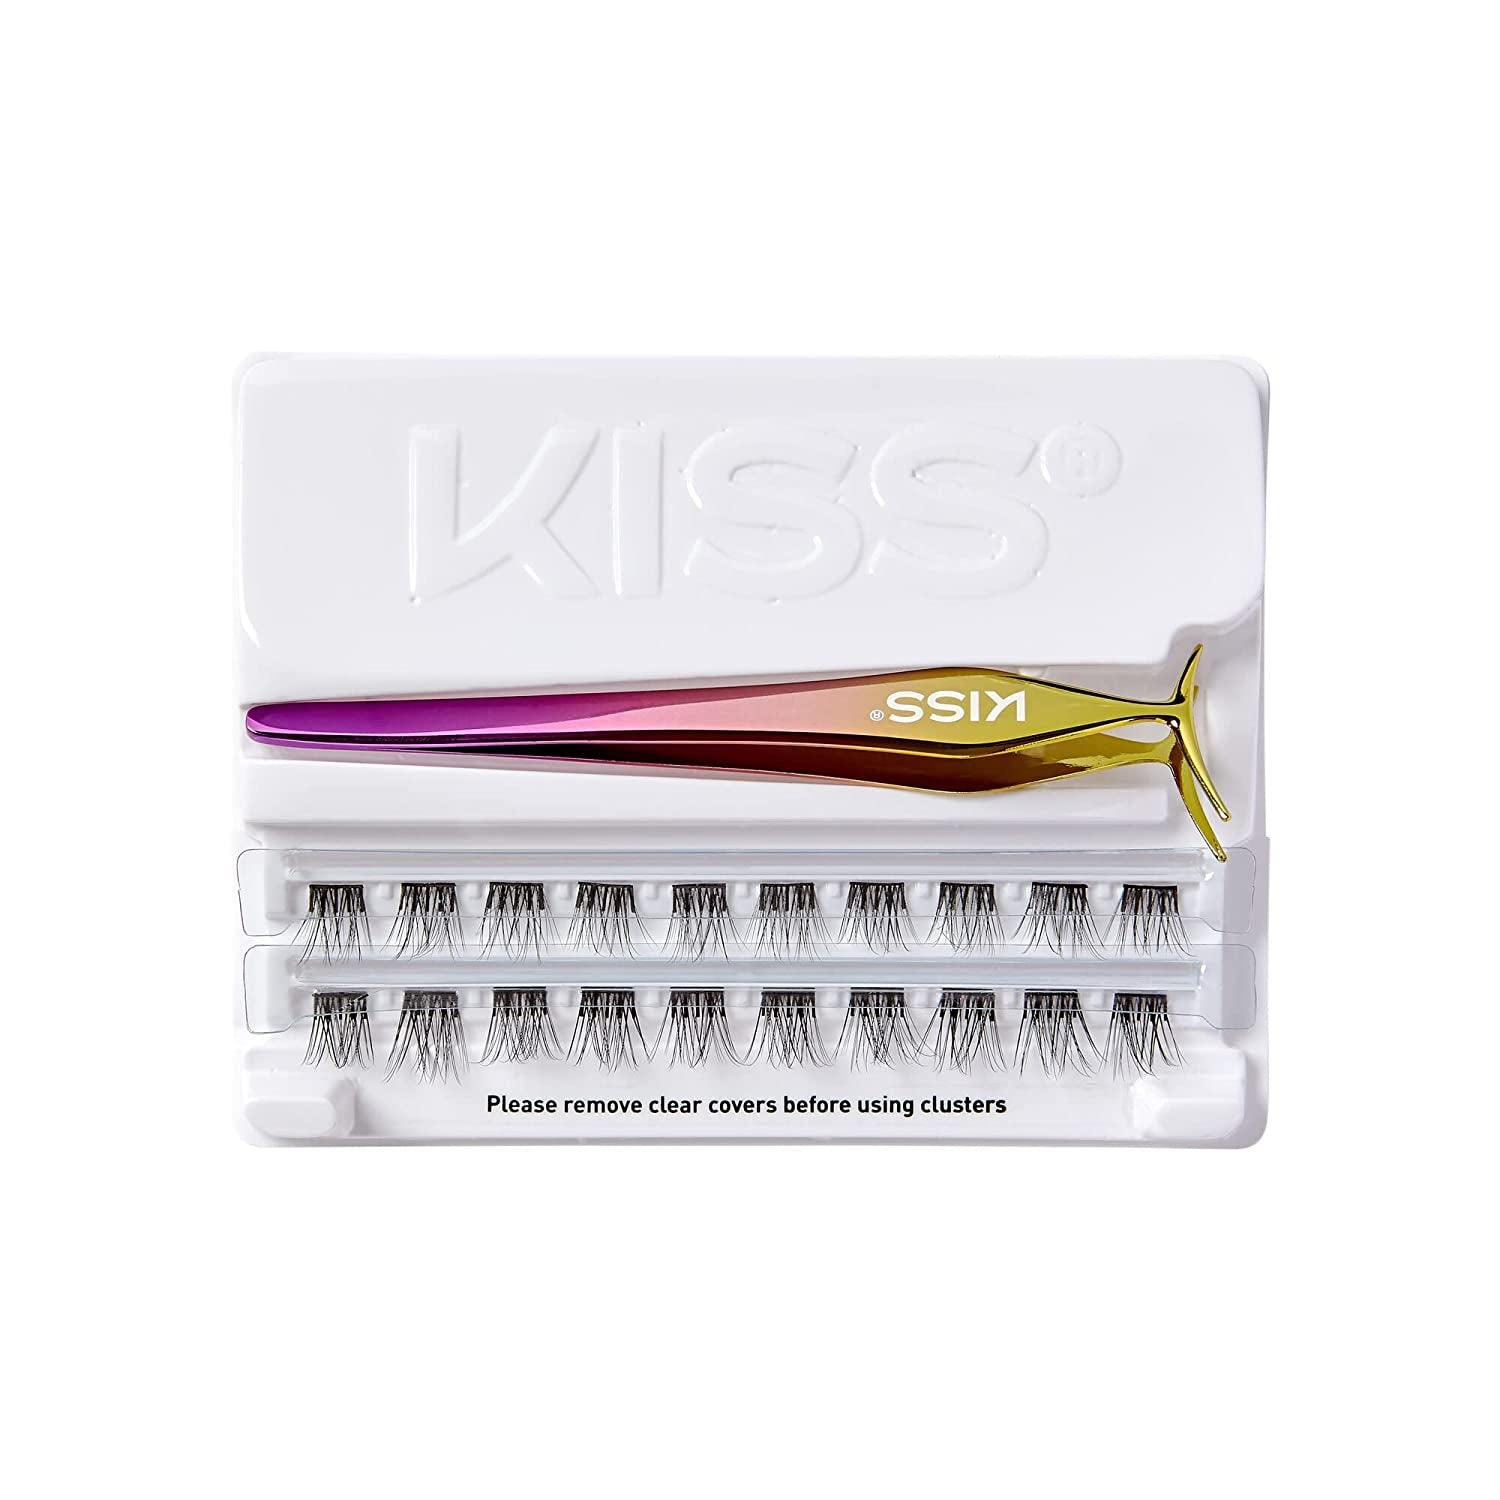 KISS Impress Press-On Falsies Eyelash Clusters Kit - Natural Black